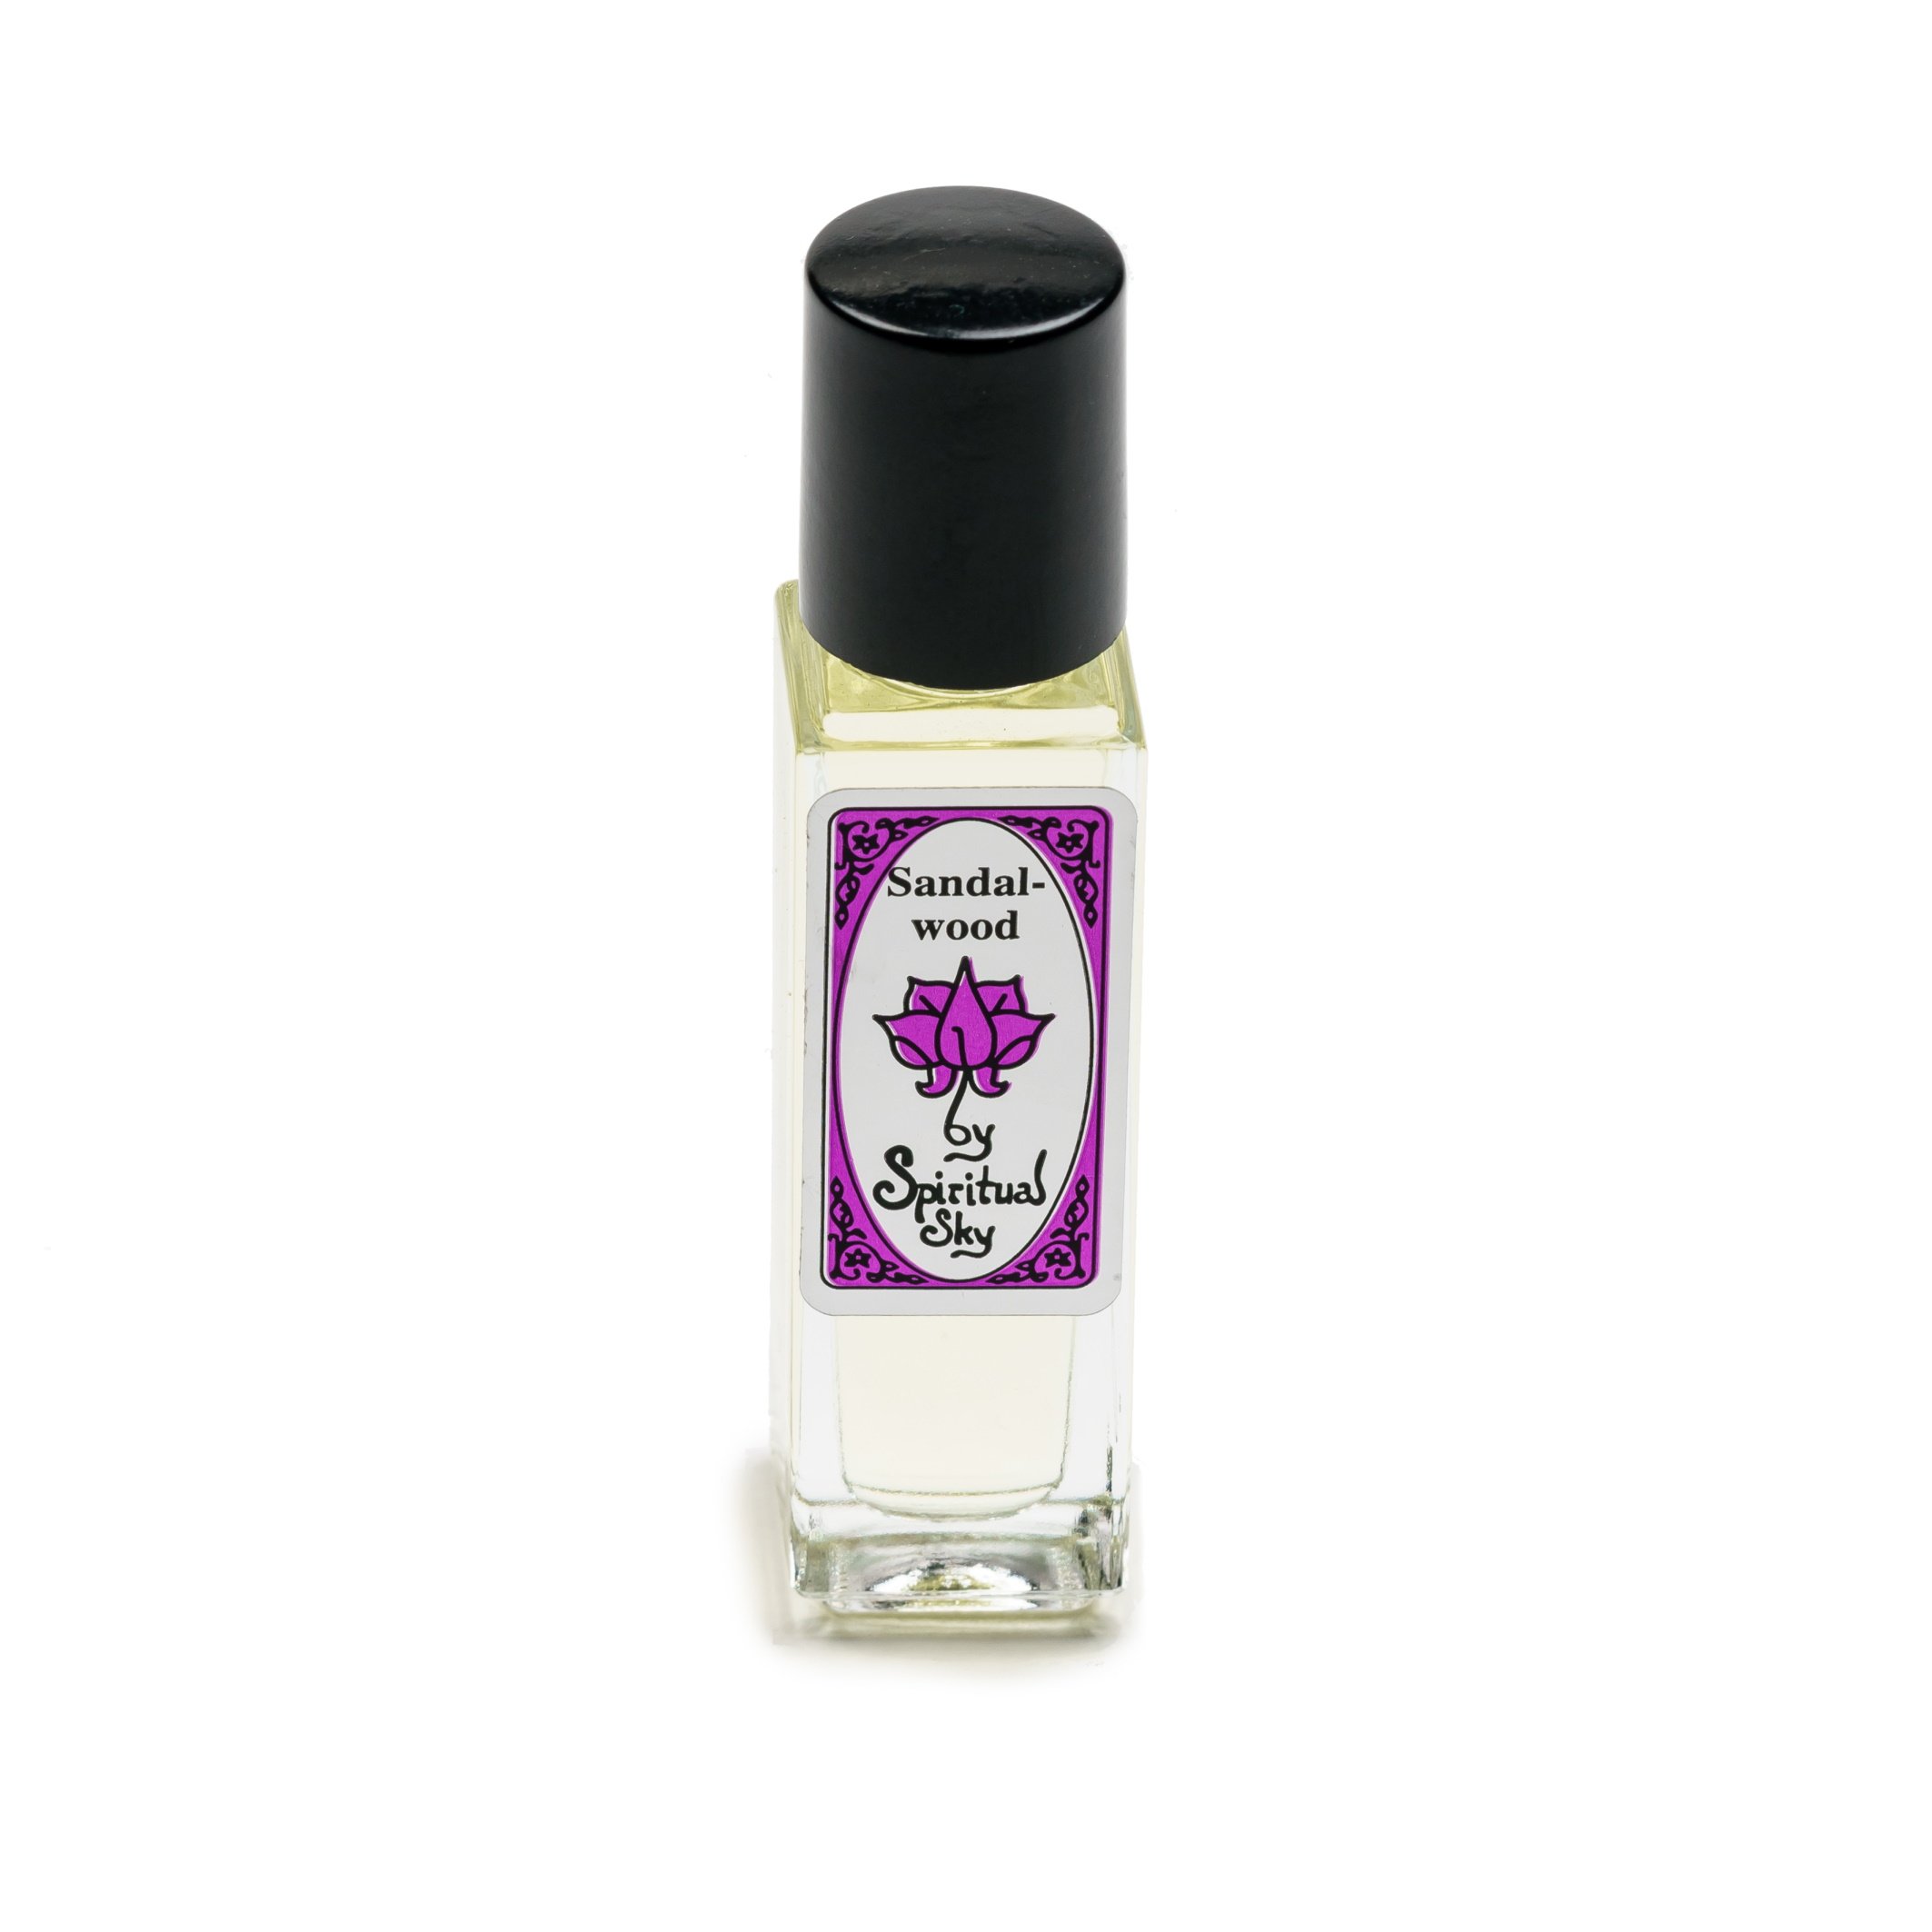 Sandalwood Spiritual Sky Perfume Oil